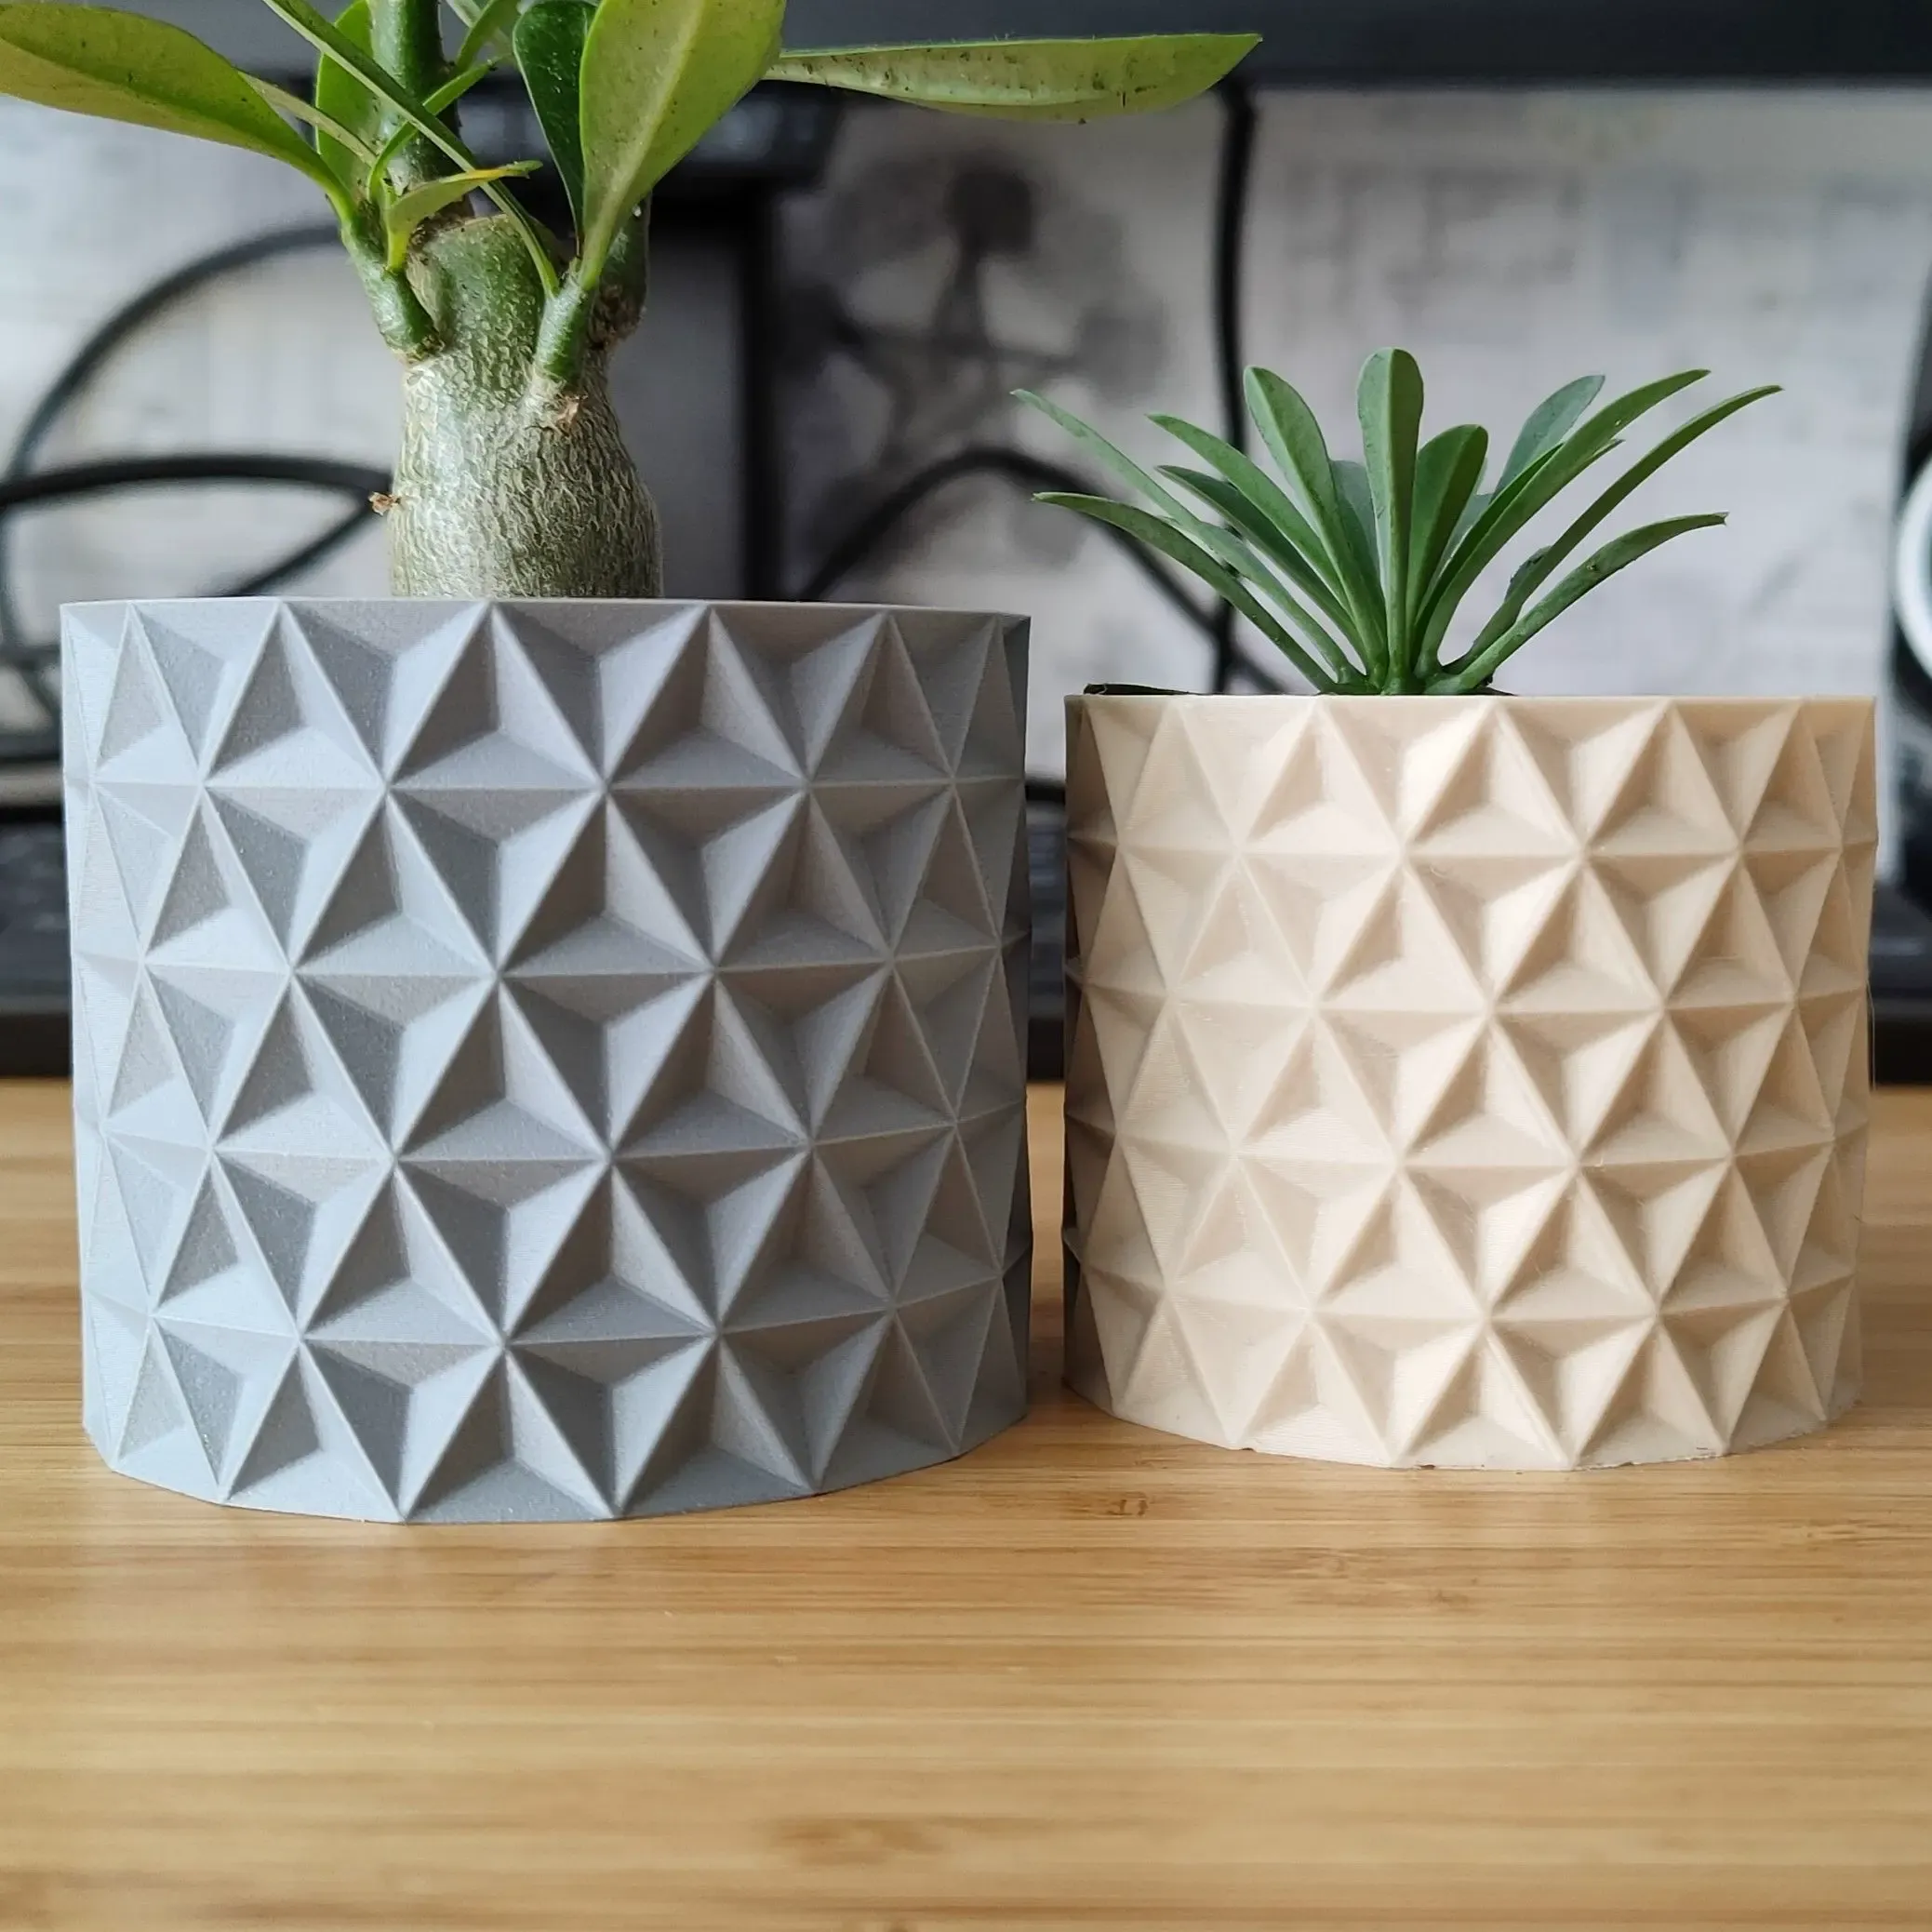 Tradicional Triangle Plant Pot and Planter - Vase mode